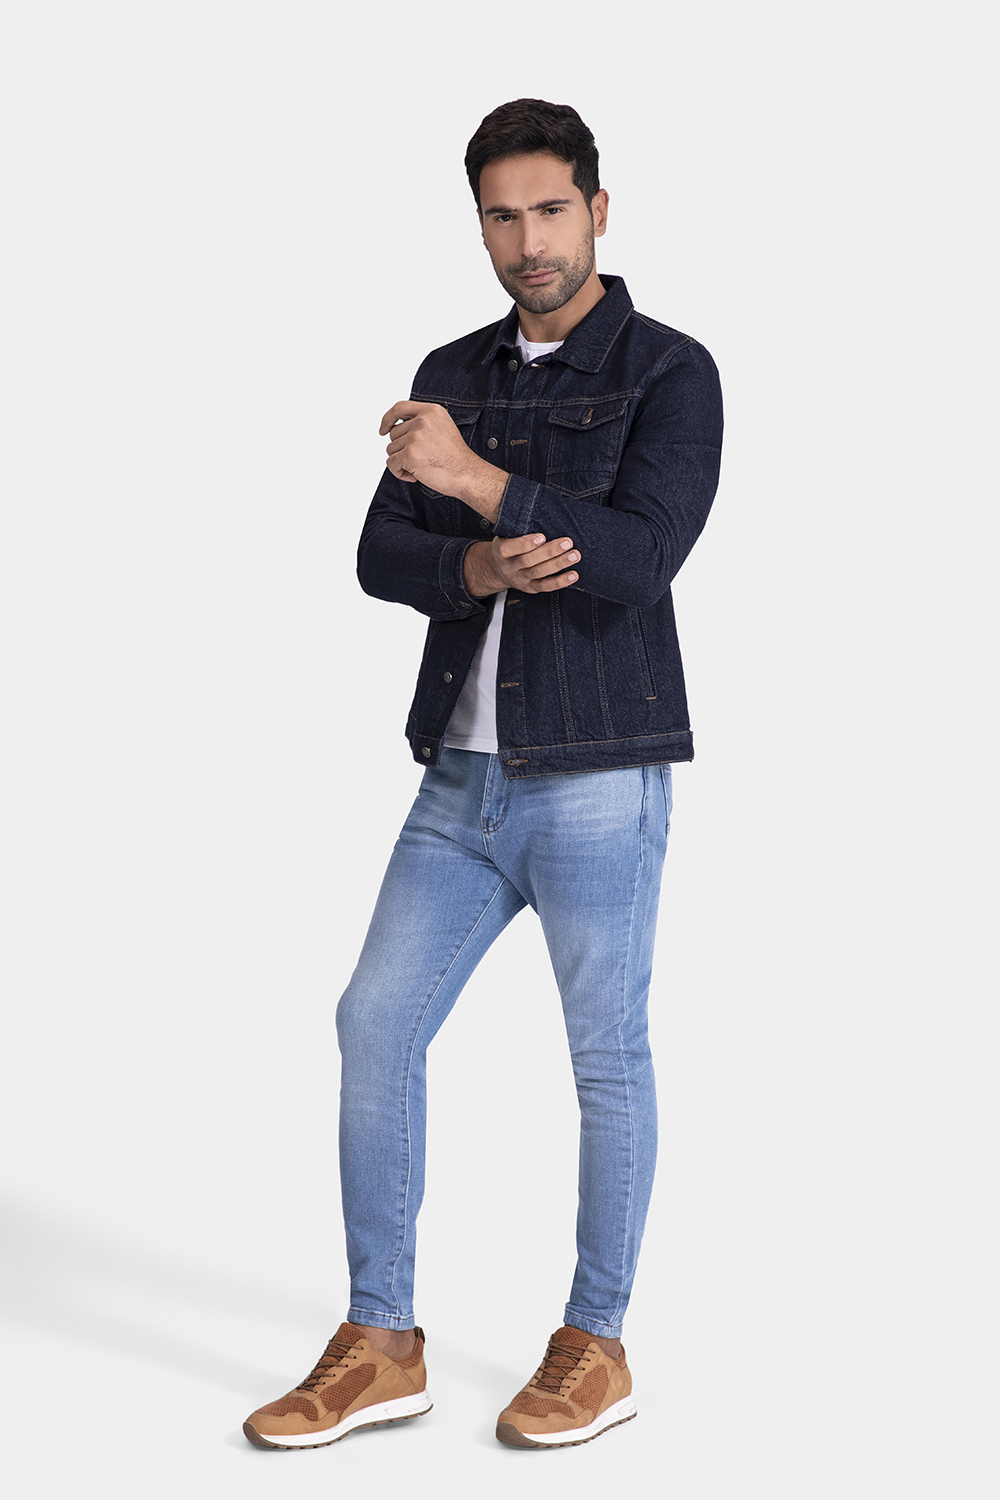 How To Wear A Blazer Jeans Combo | Match Blazers With Denim | Blazer with jeans  men, Suit jacket with jeans, Blazer with jeans